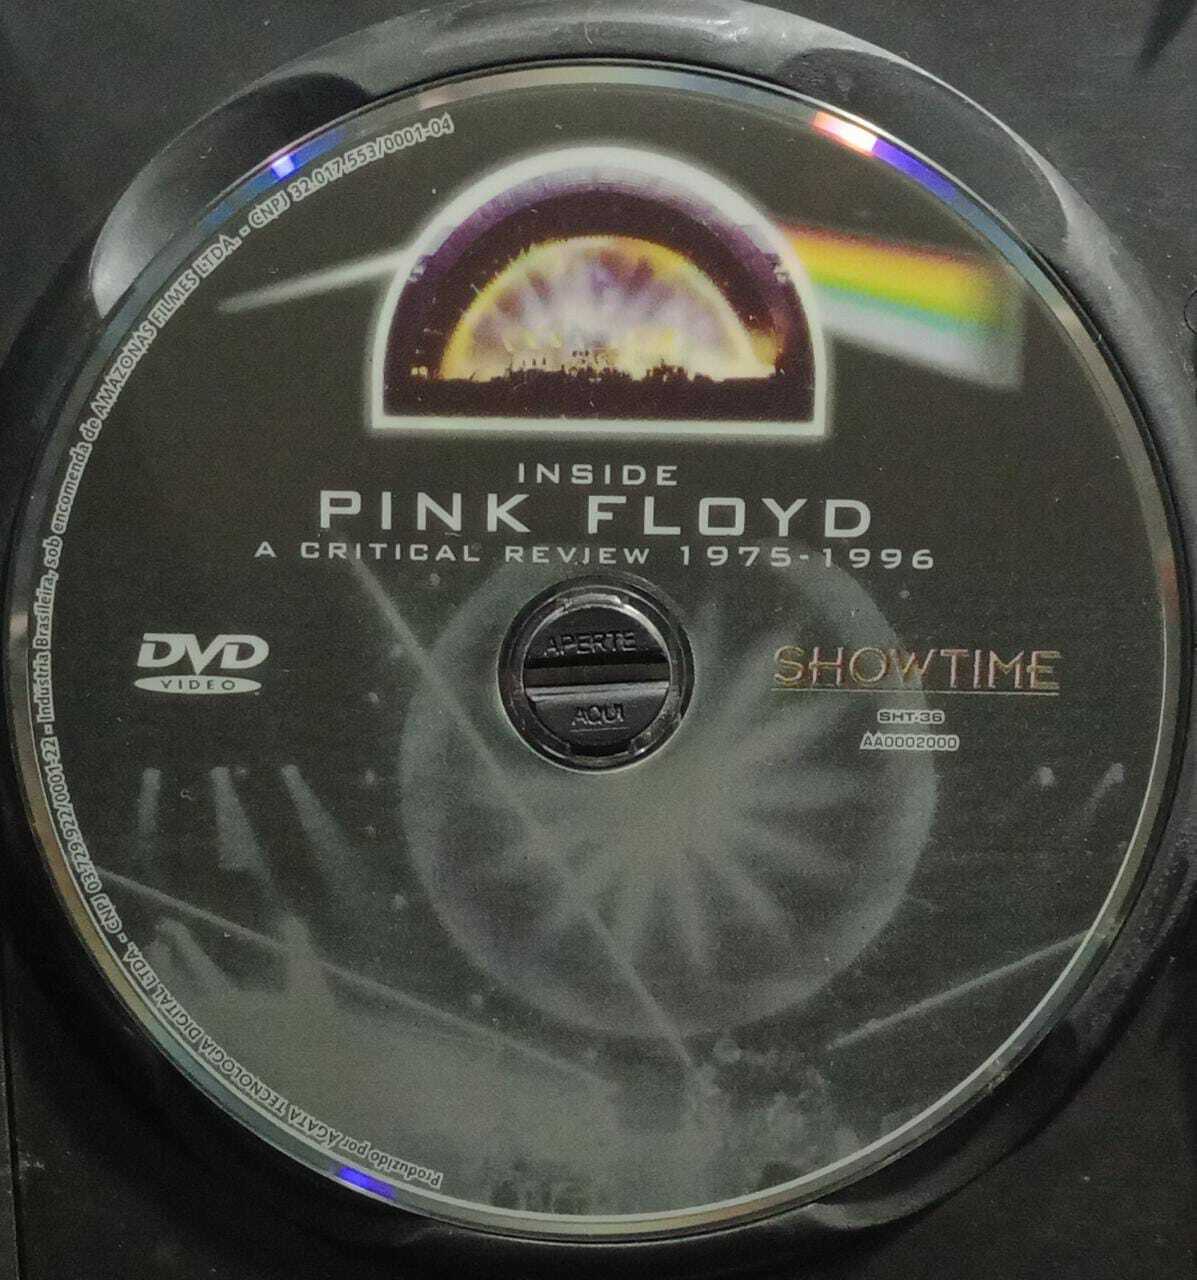 DVD - Pink Floyd - Inside a Critical Review 1975-1996 Volume 2